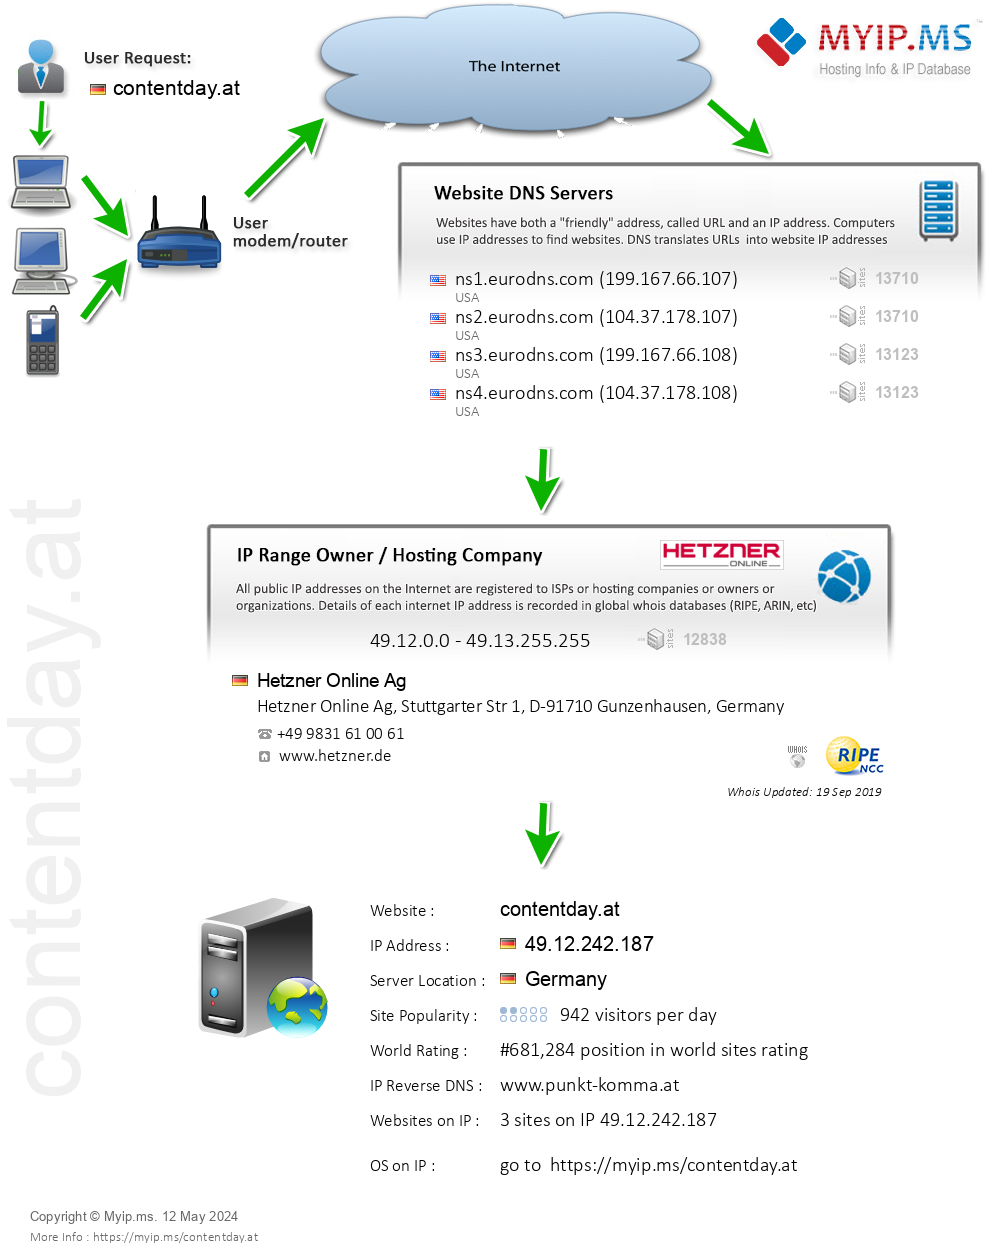 Contentday.at - Website Hosting Visual IP Diagram